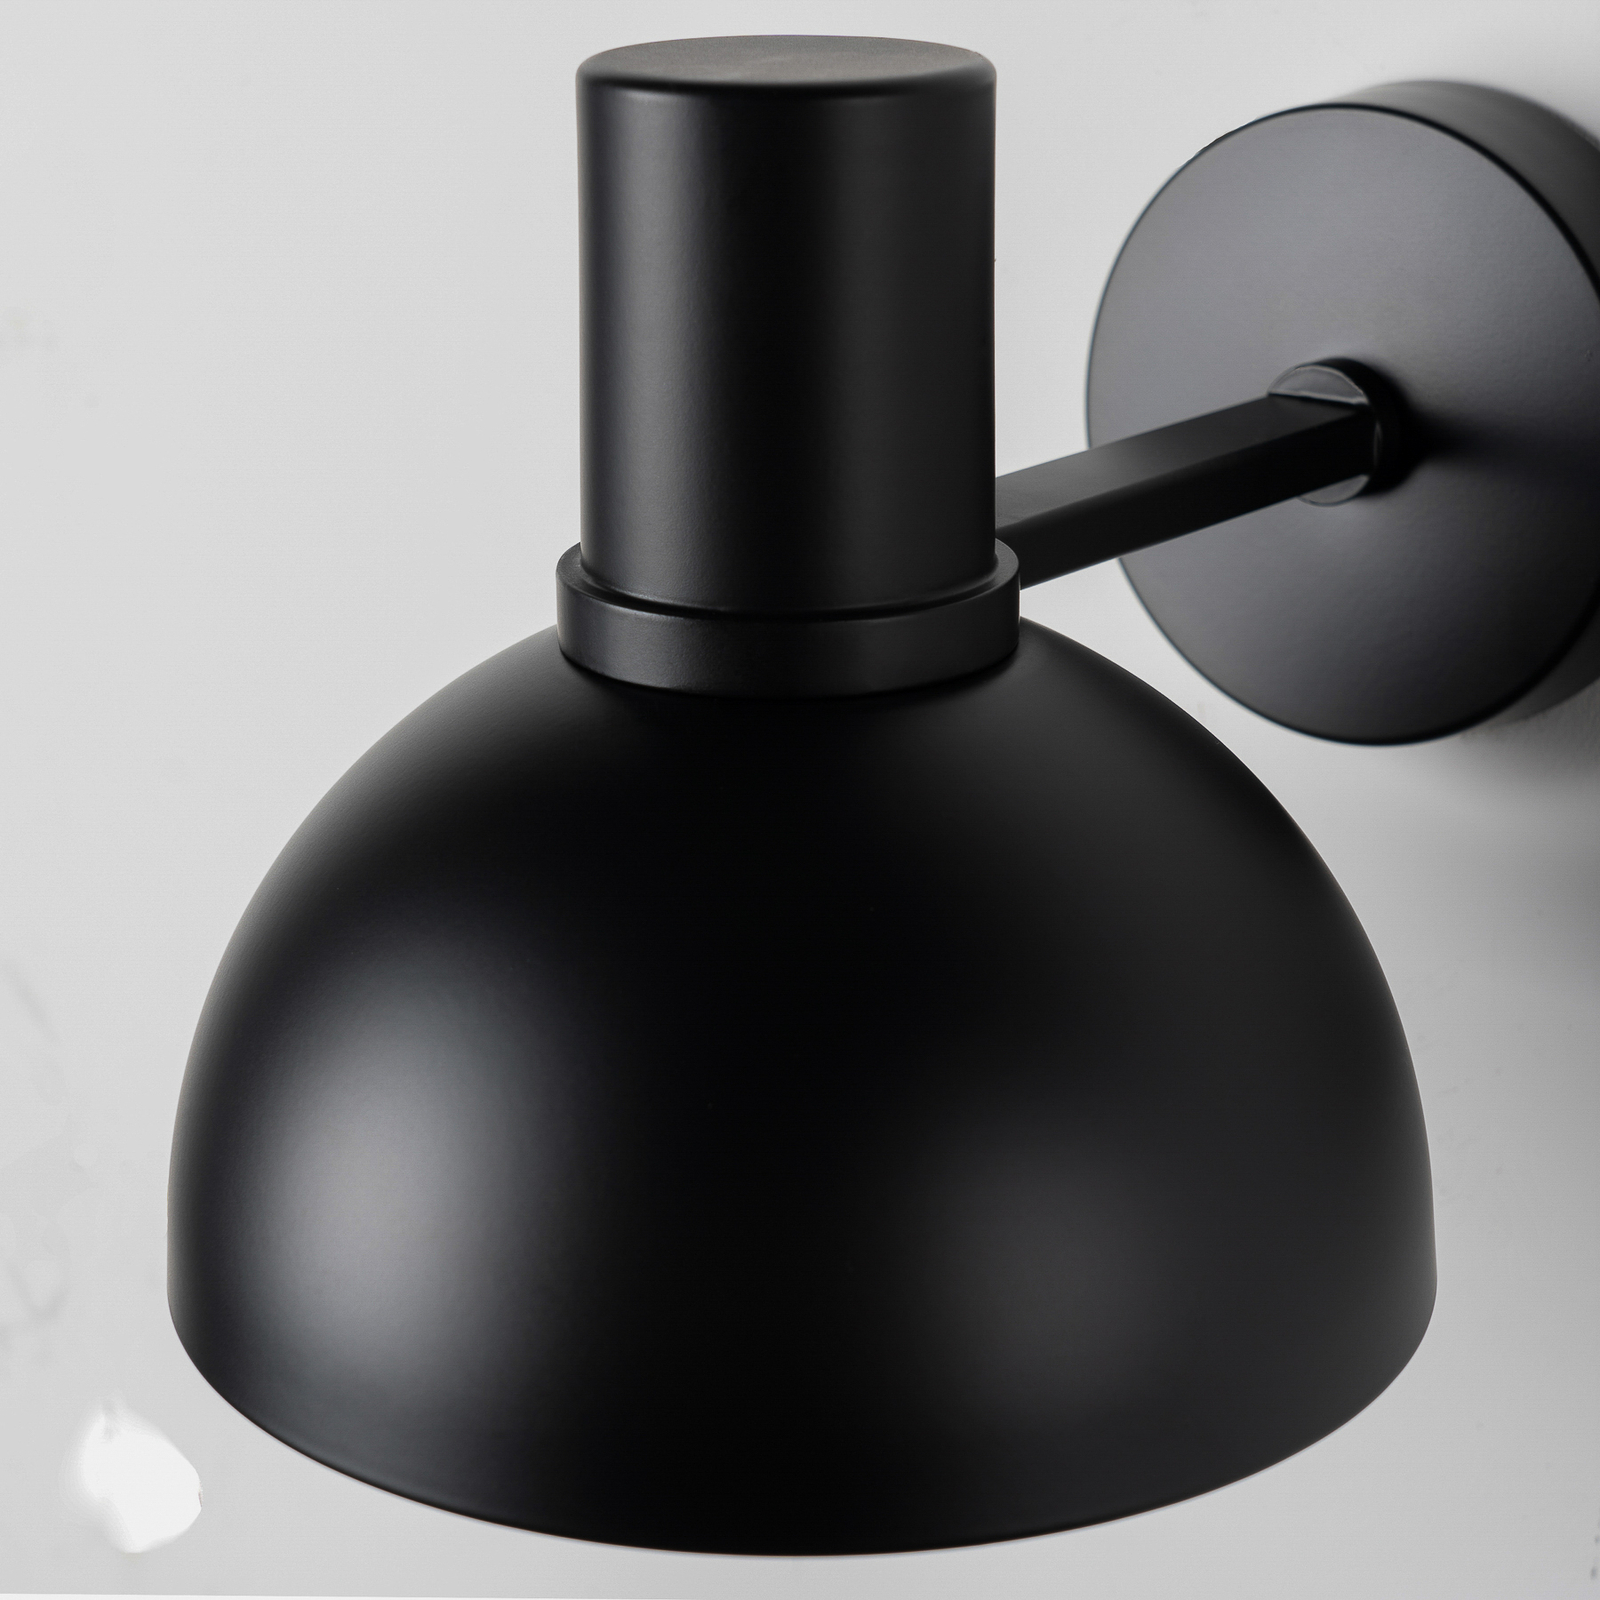 Lucande Mostrid wandlamp van zwart ijzer